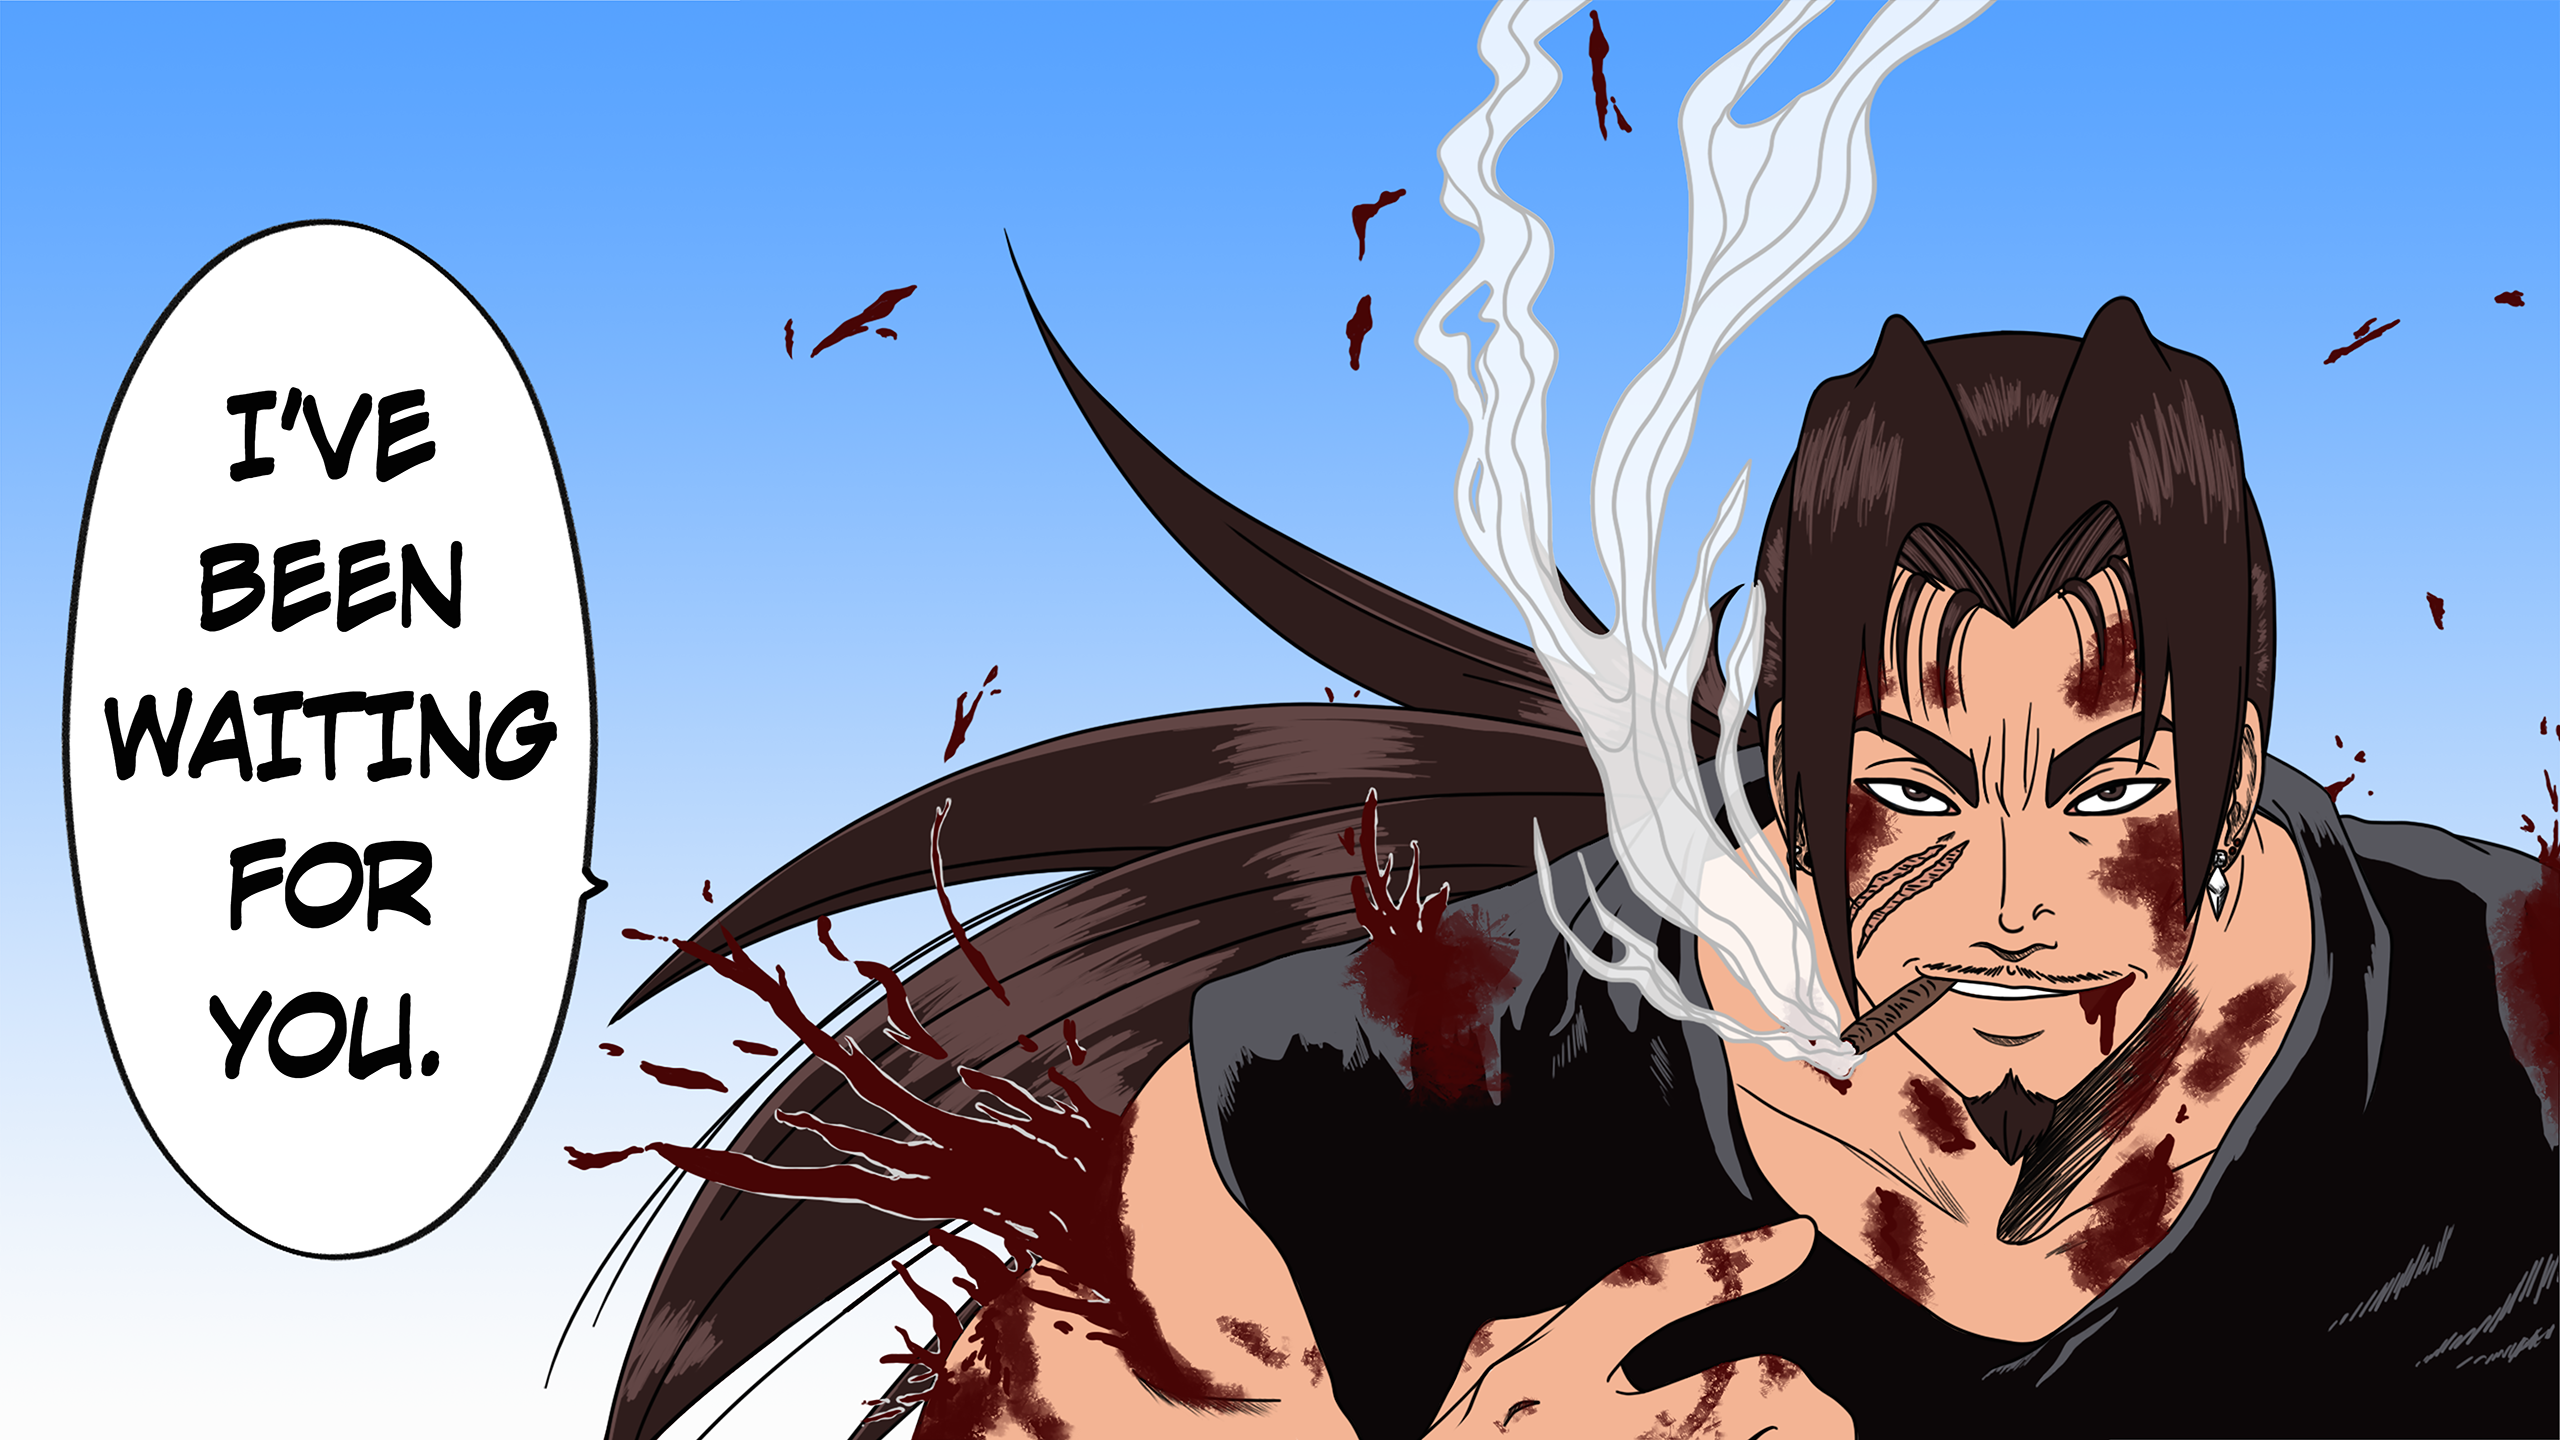 Alan - Manga Redraw (colored panel version)